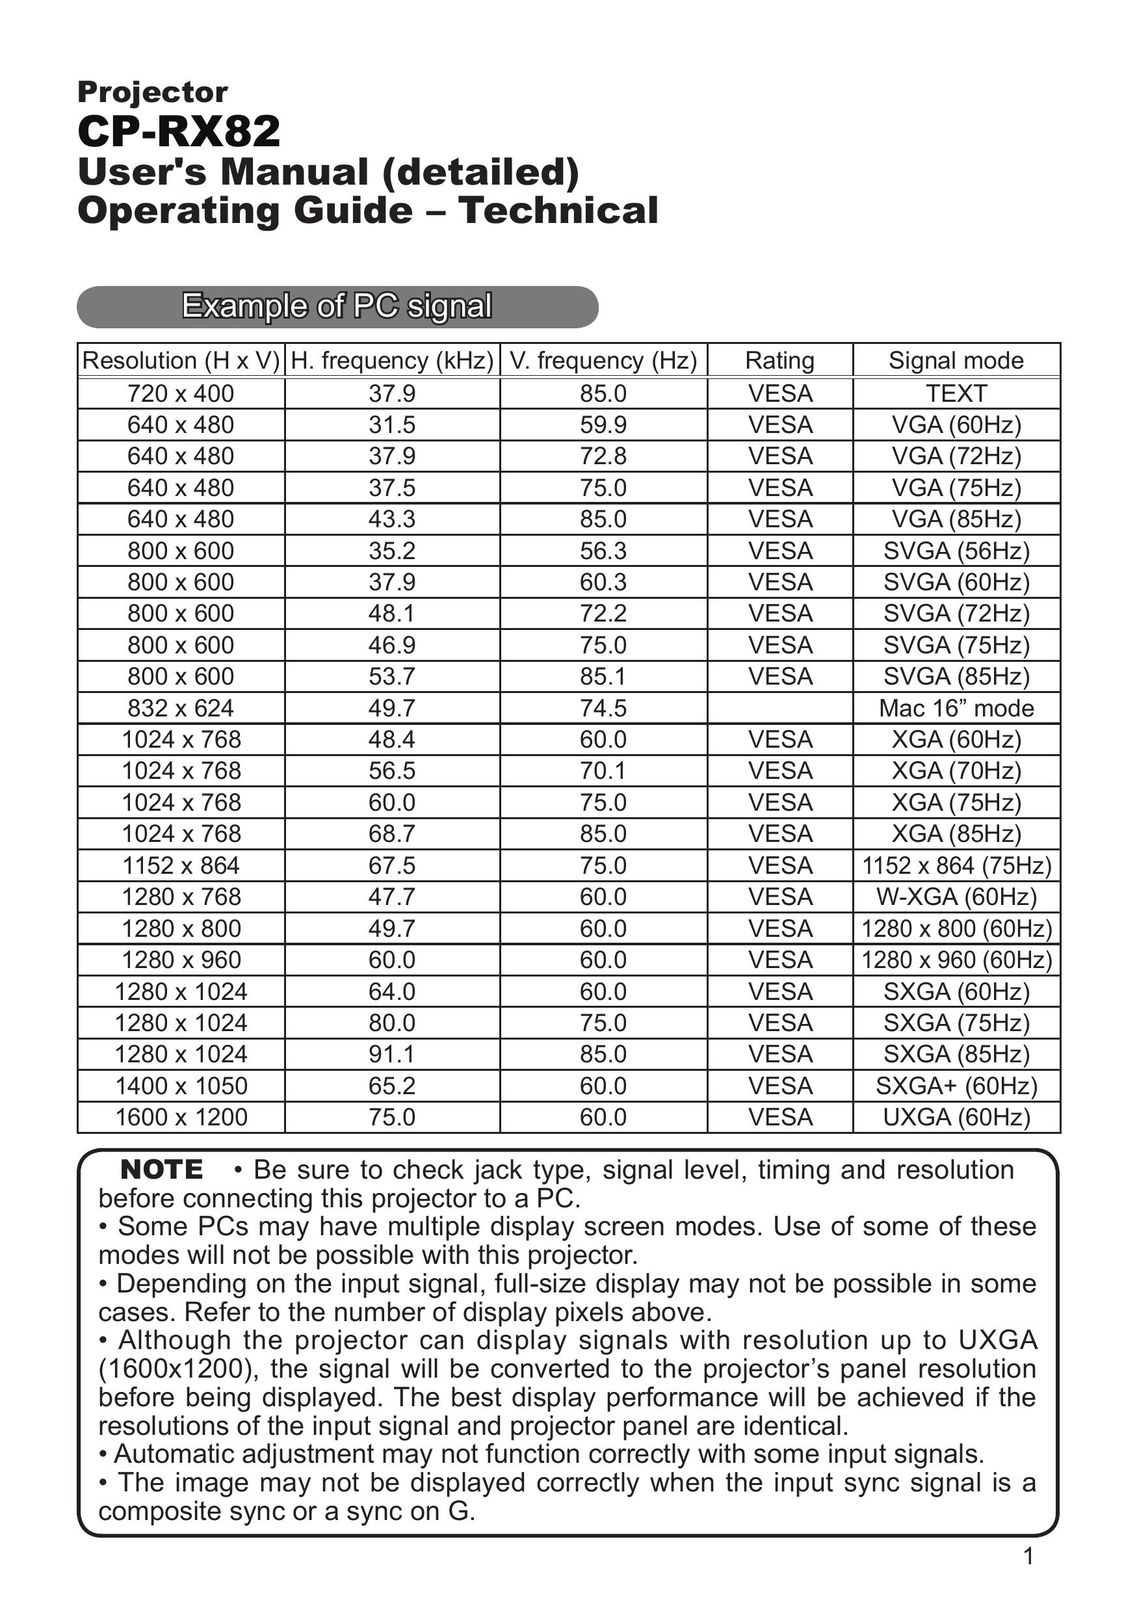 Hitachi CP-RX82 Projector User Manual